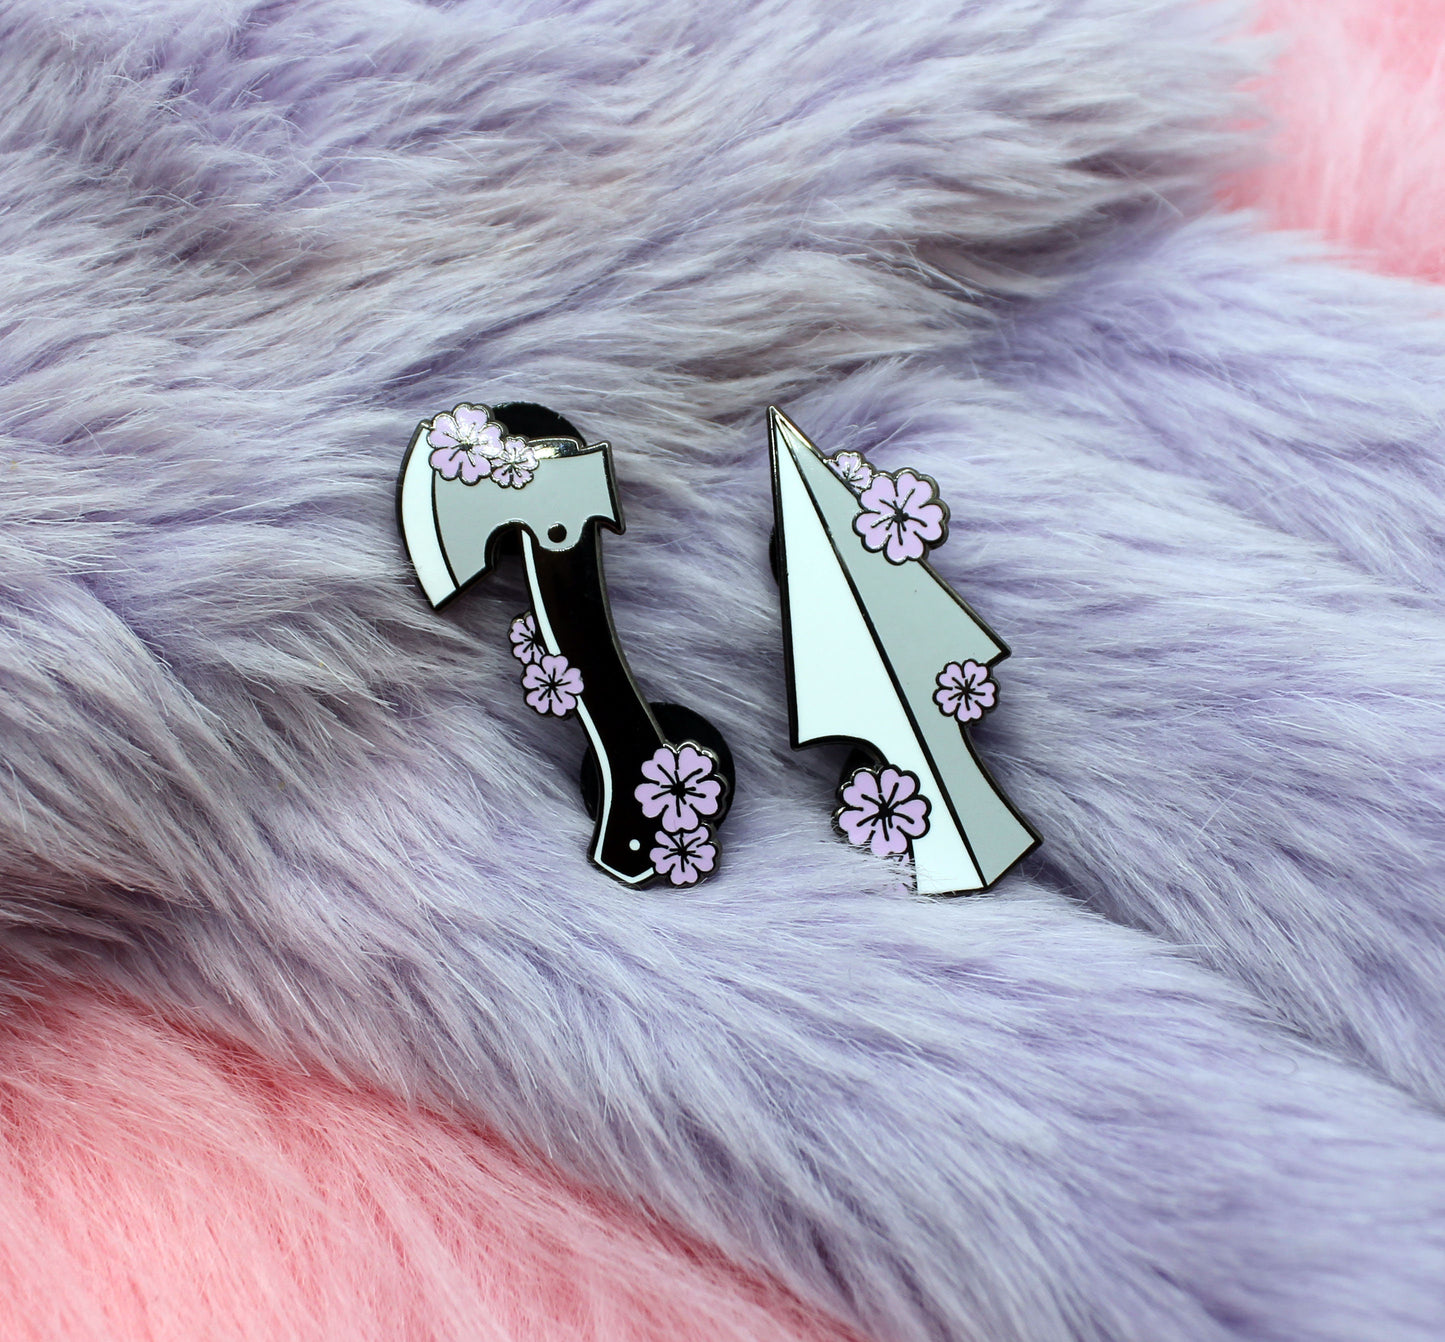 Sakura Axe Enamel Pin (A Grade, Hard, Black Nickel) - Sakura Blades Pin Set